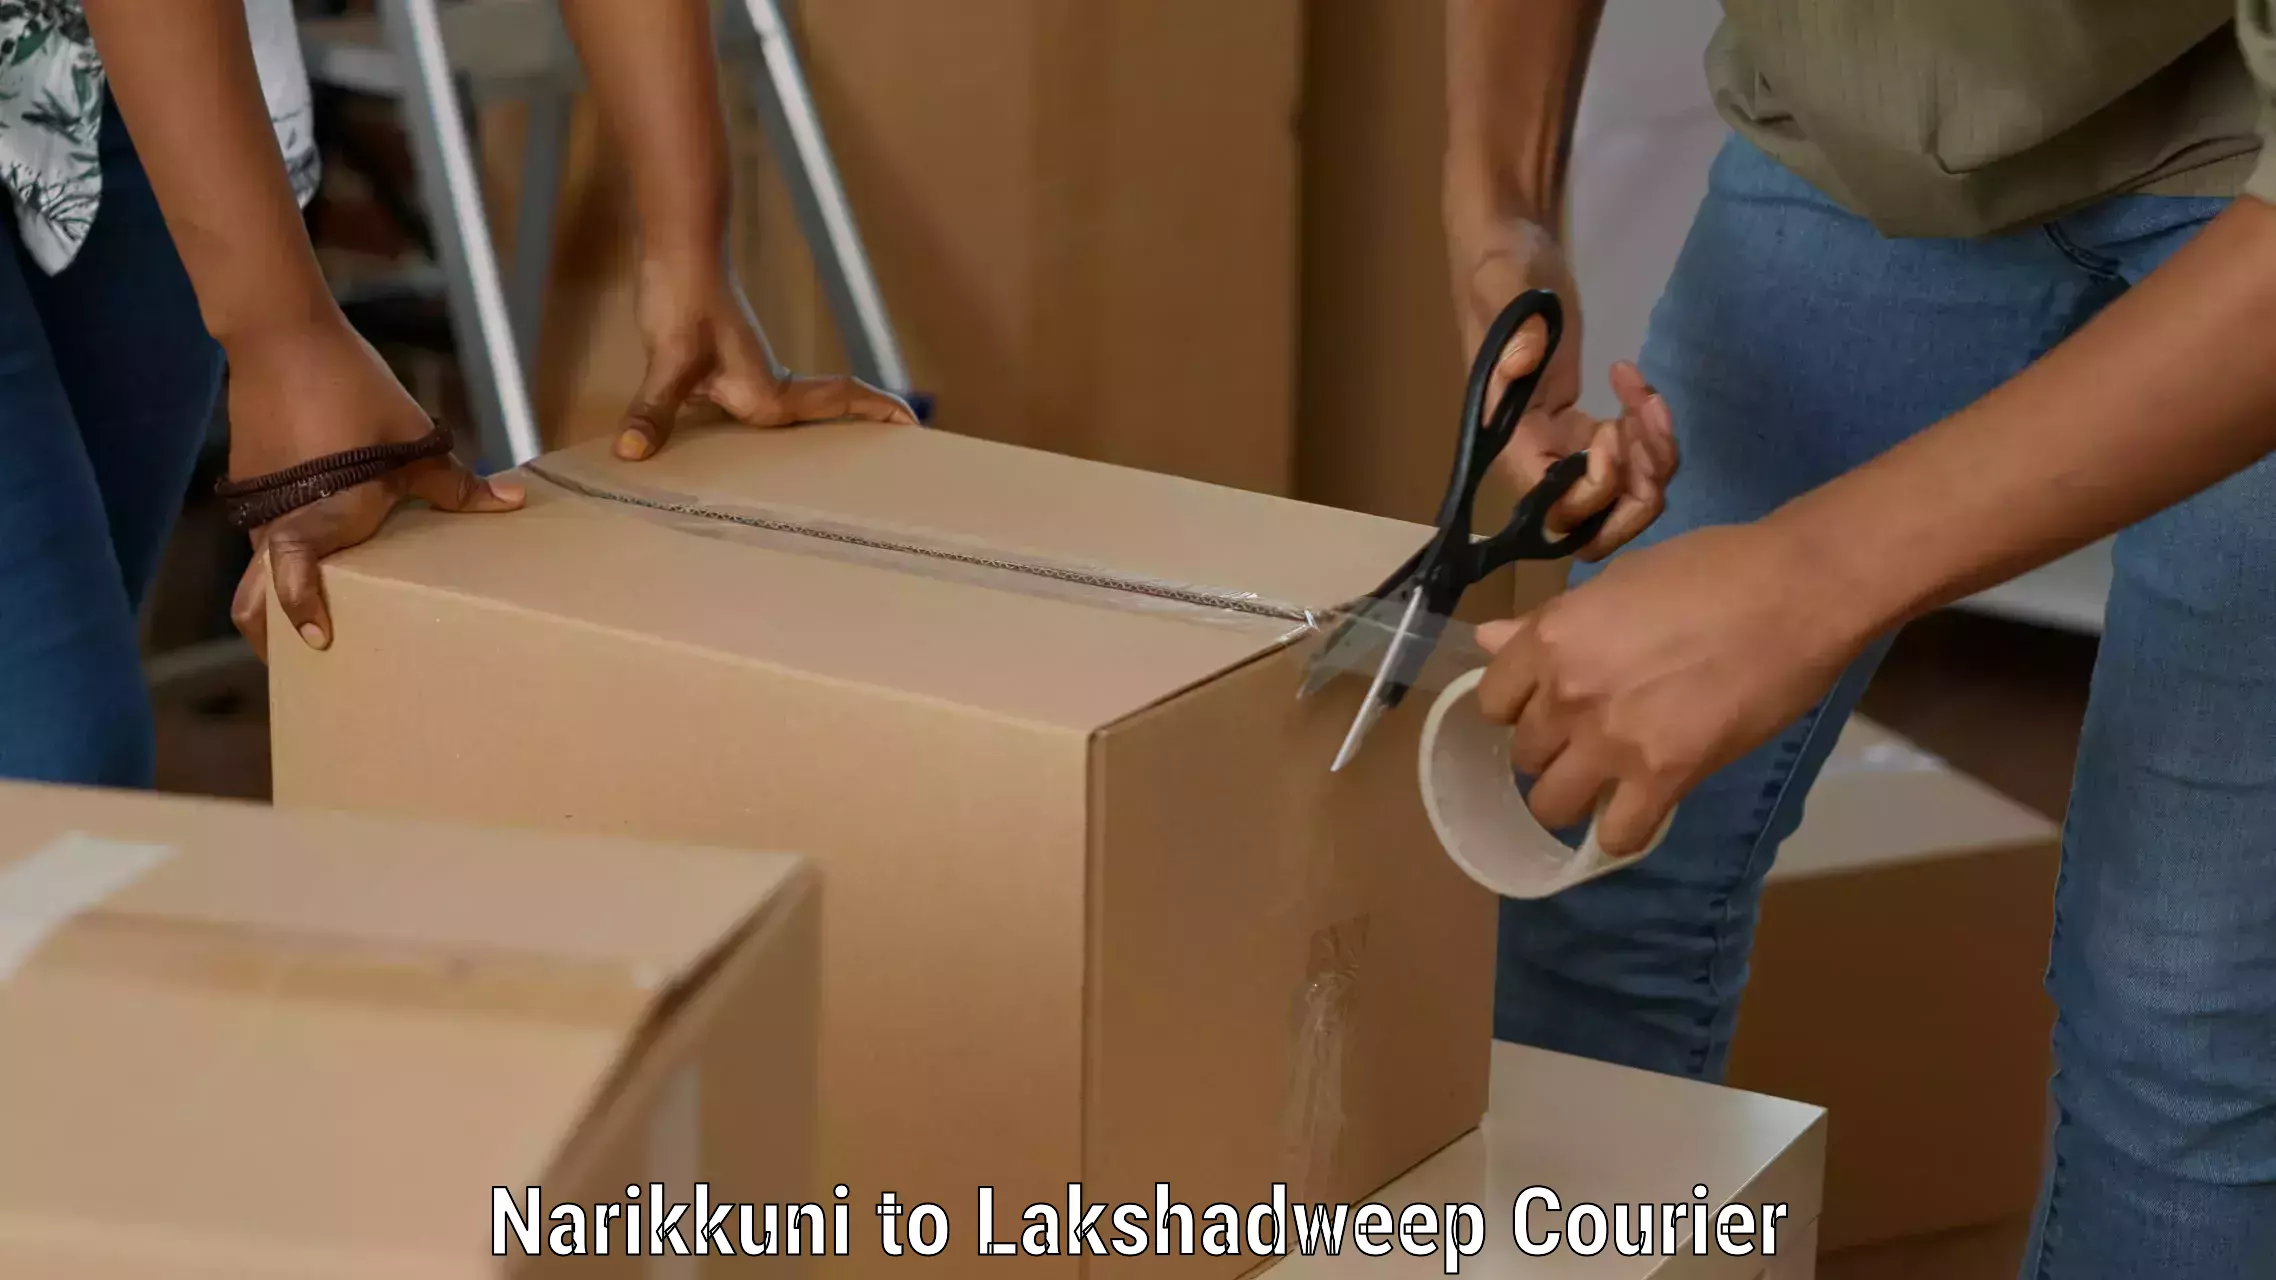 Next-day freight services Narikkuni to Lakshadweep